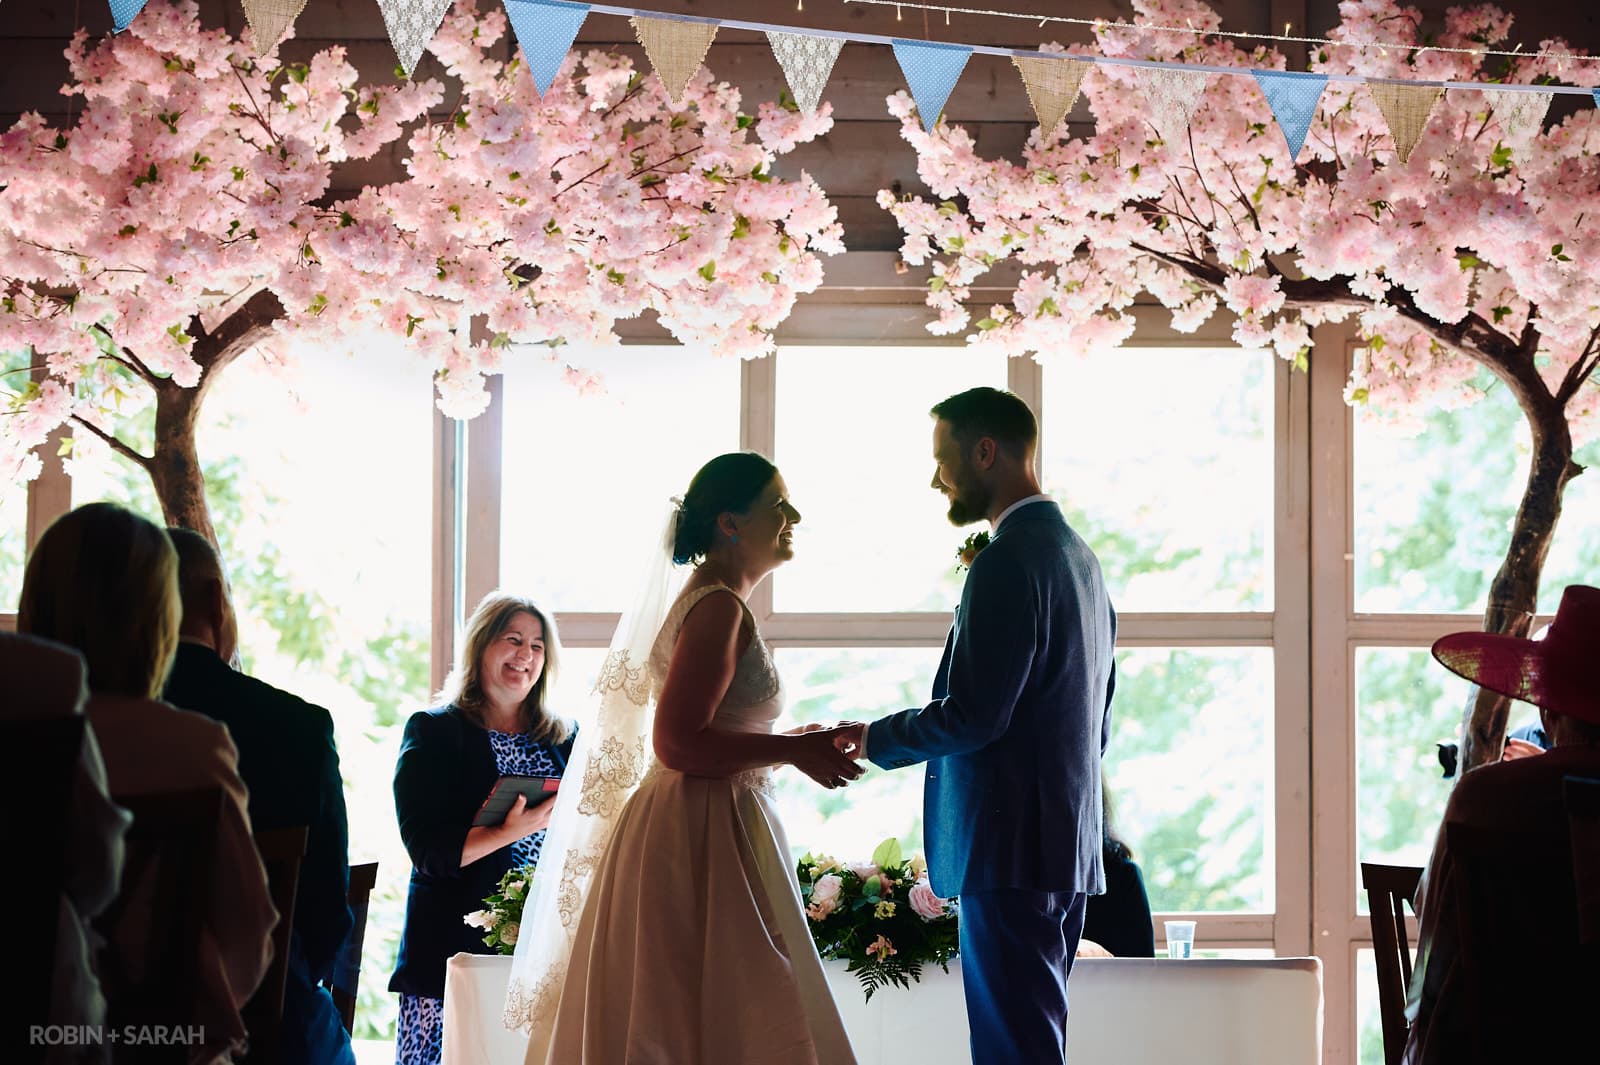 Bride and groom exchange wedding rings under pink decorative trees in Guesten Hall wedding ceremony.